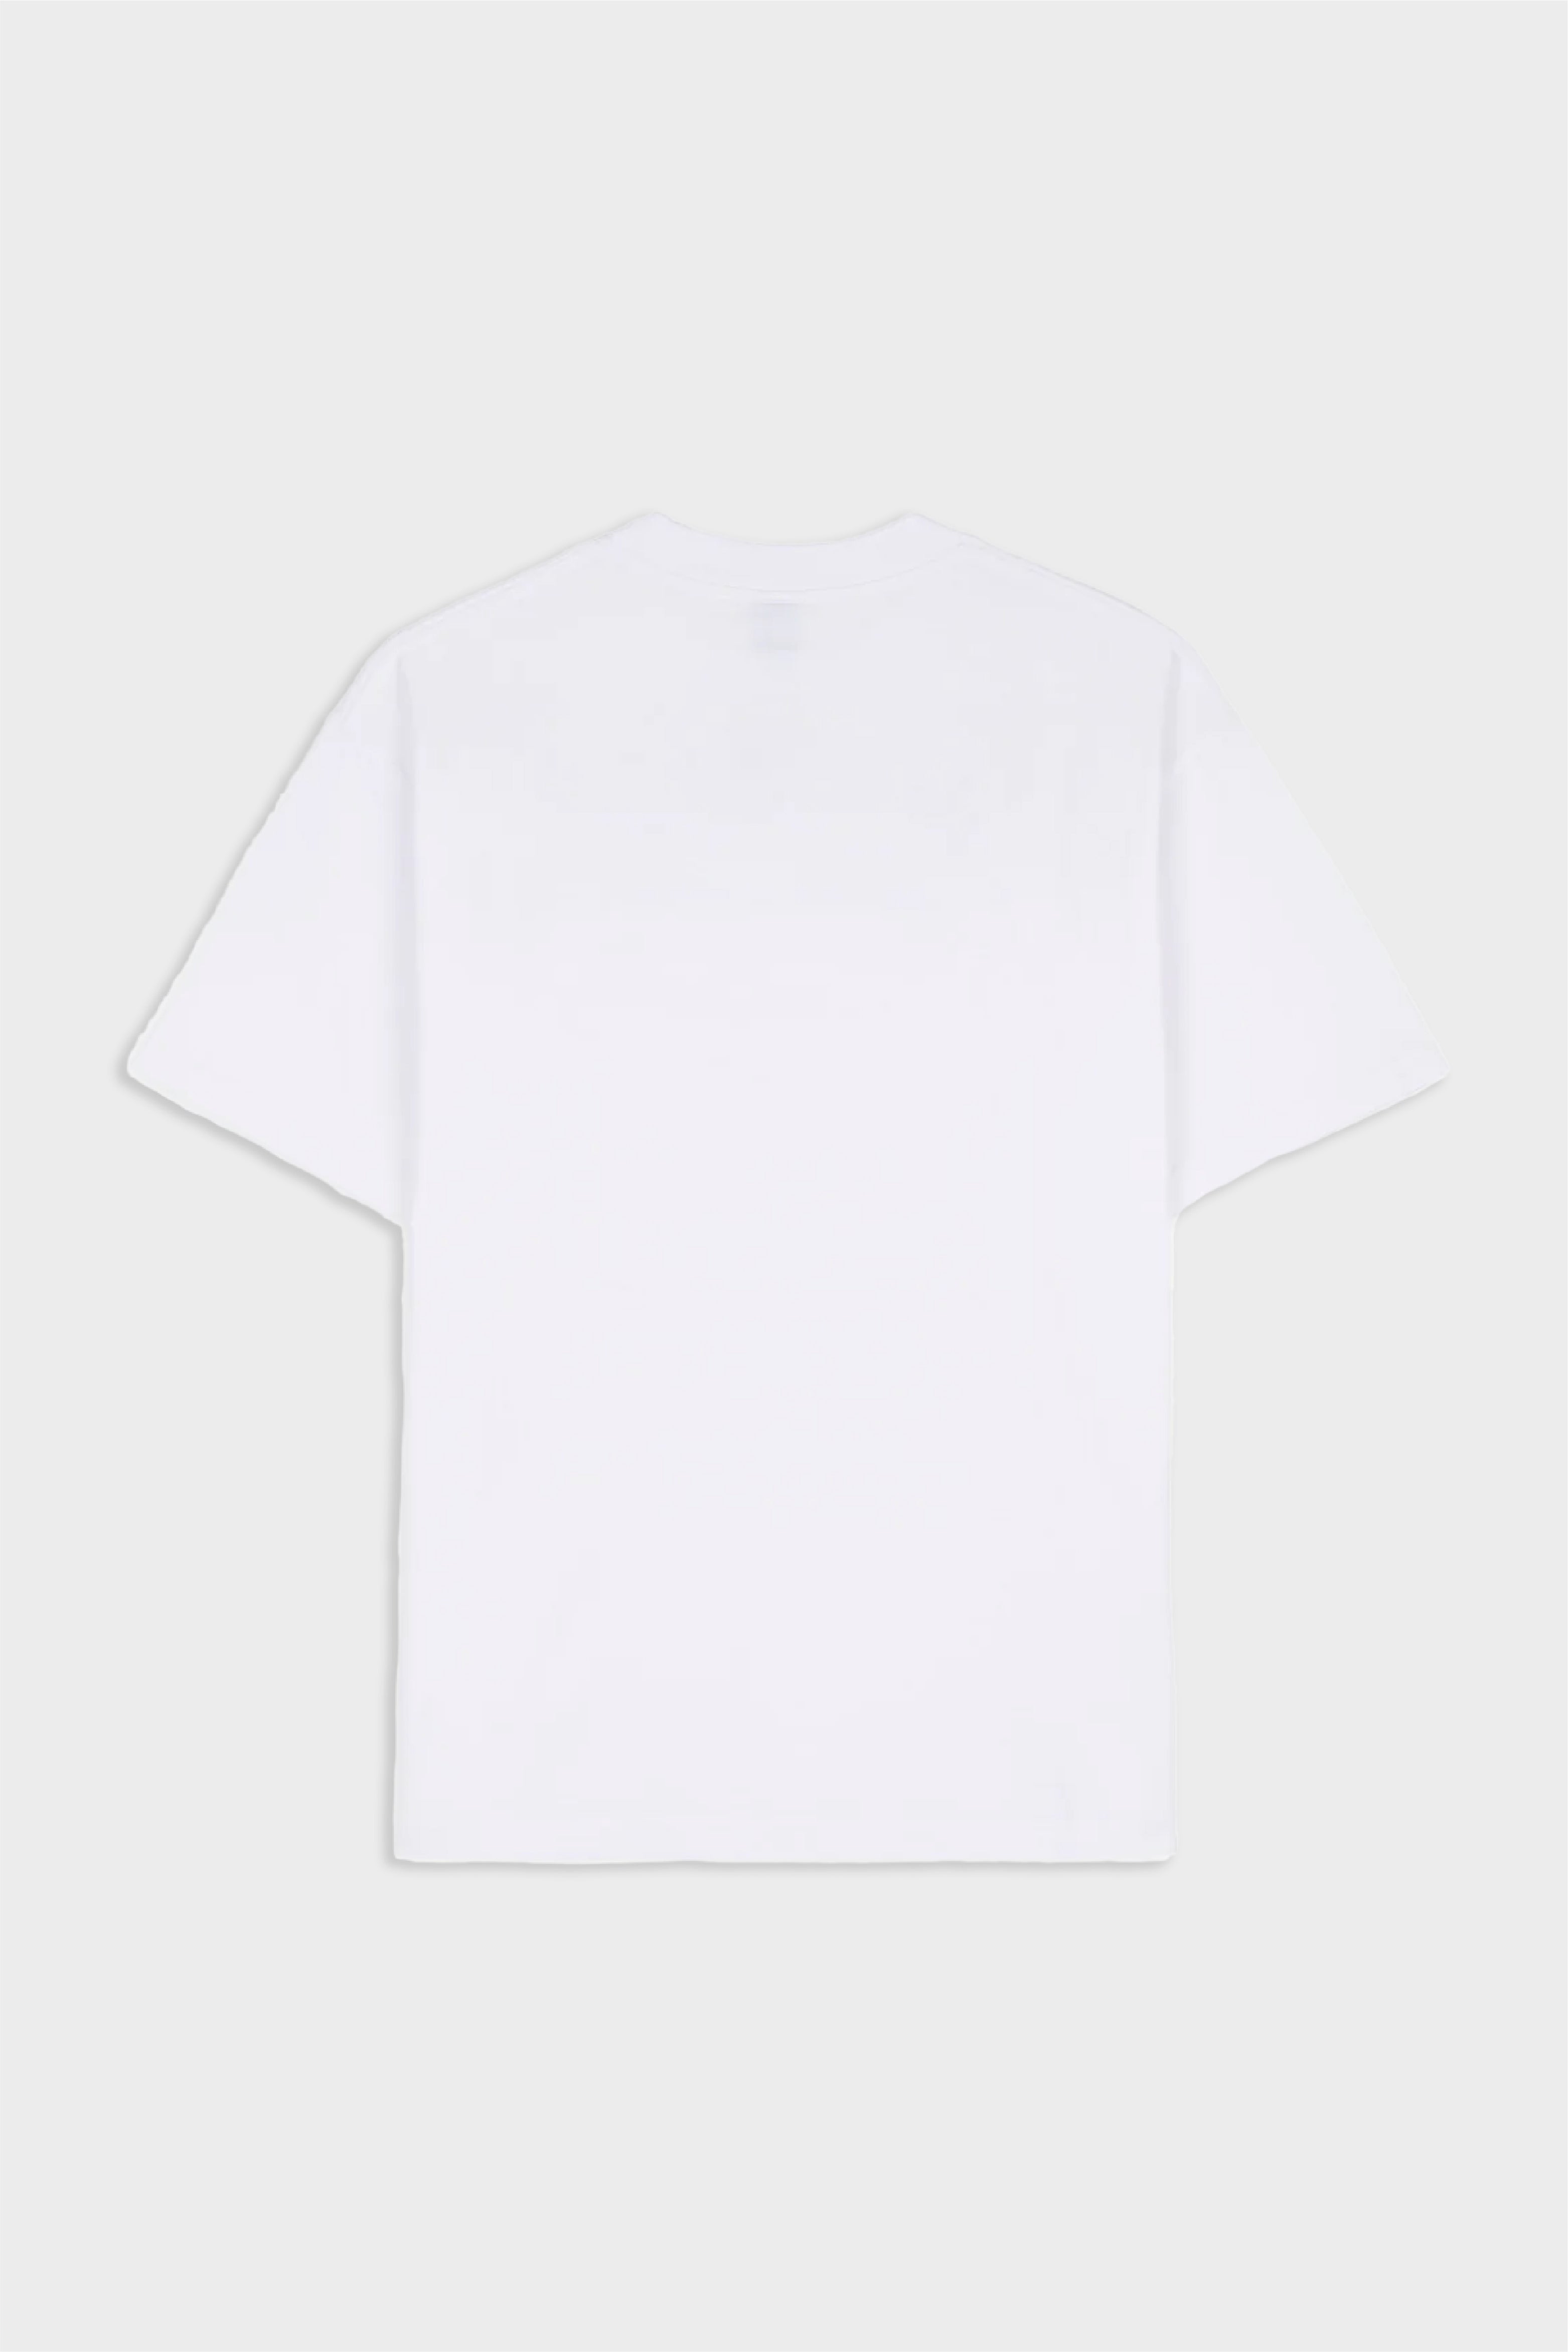 Selectshop FRAME - BRAIN DEAD Progressive Arstistry T-Shirt T-Shirts Concept Store Dubai